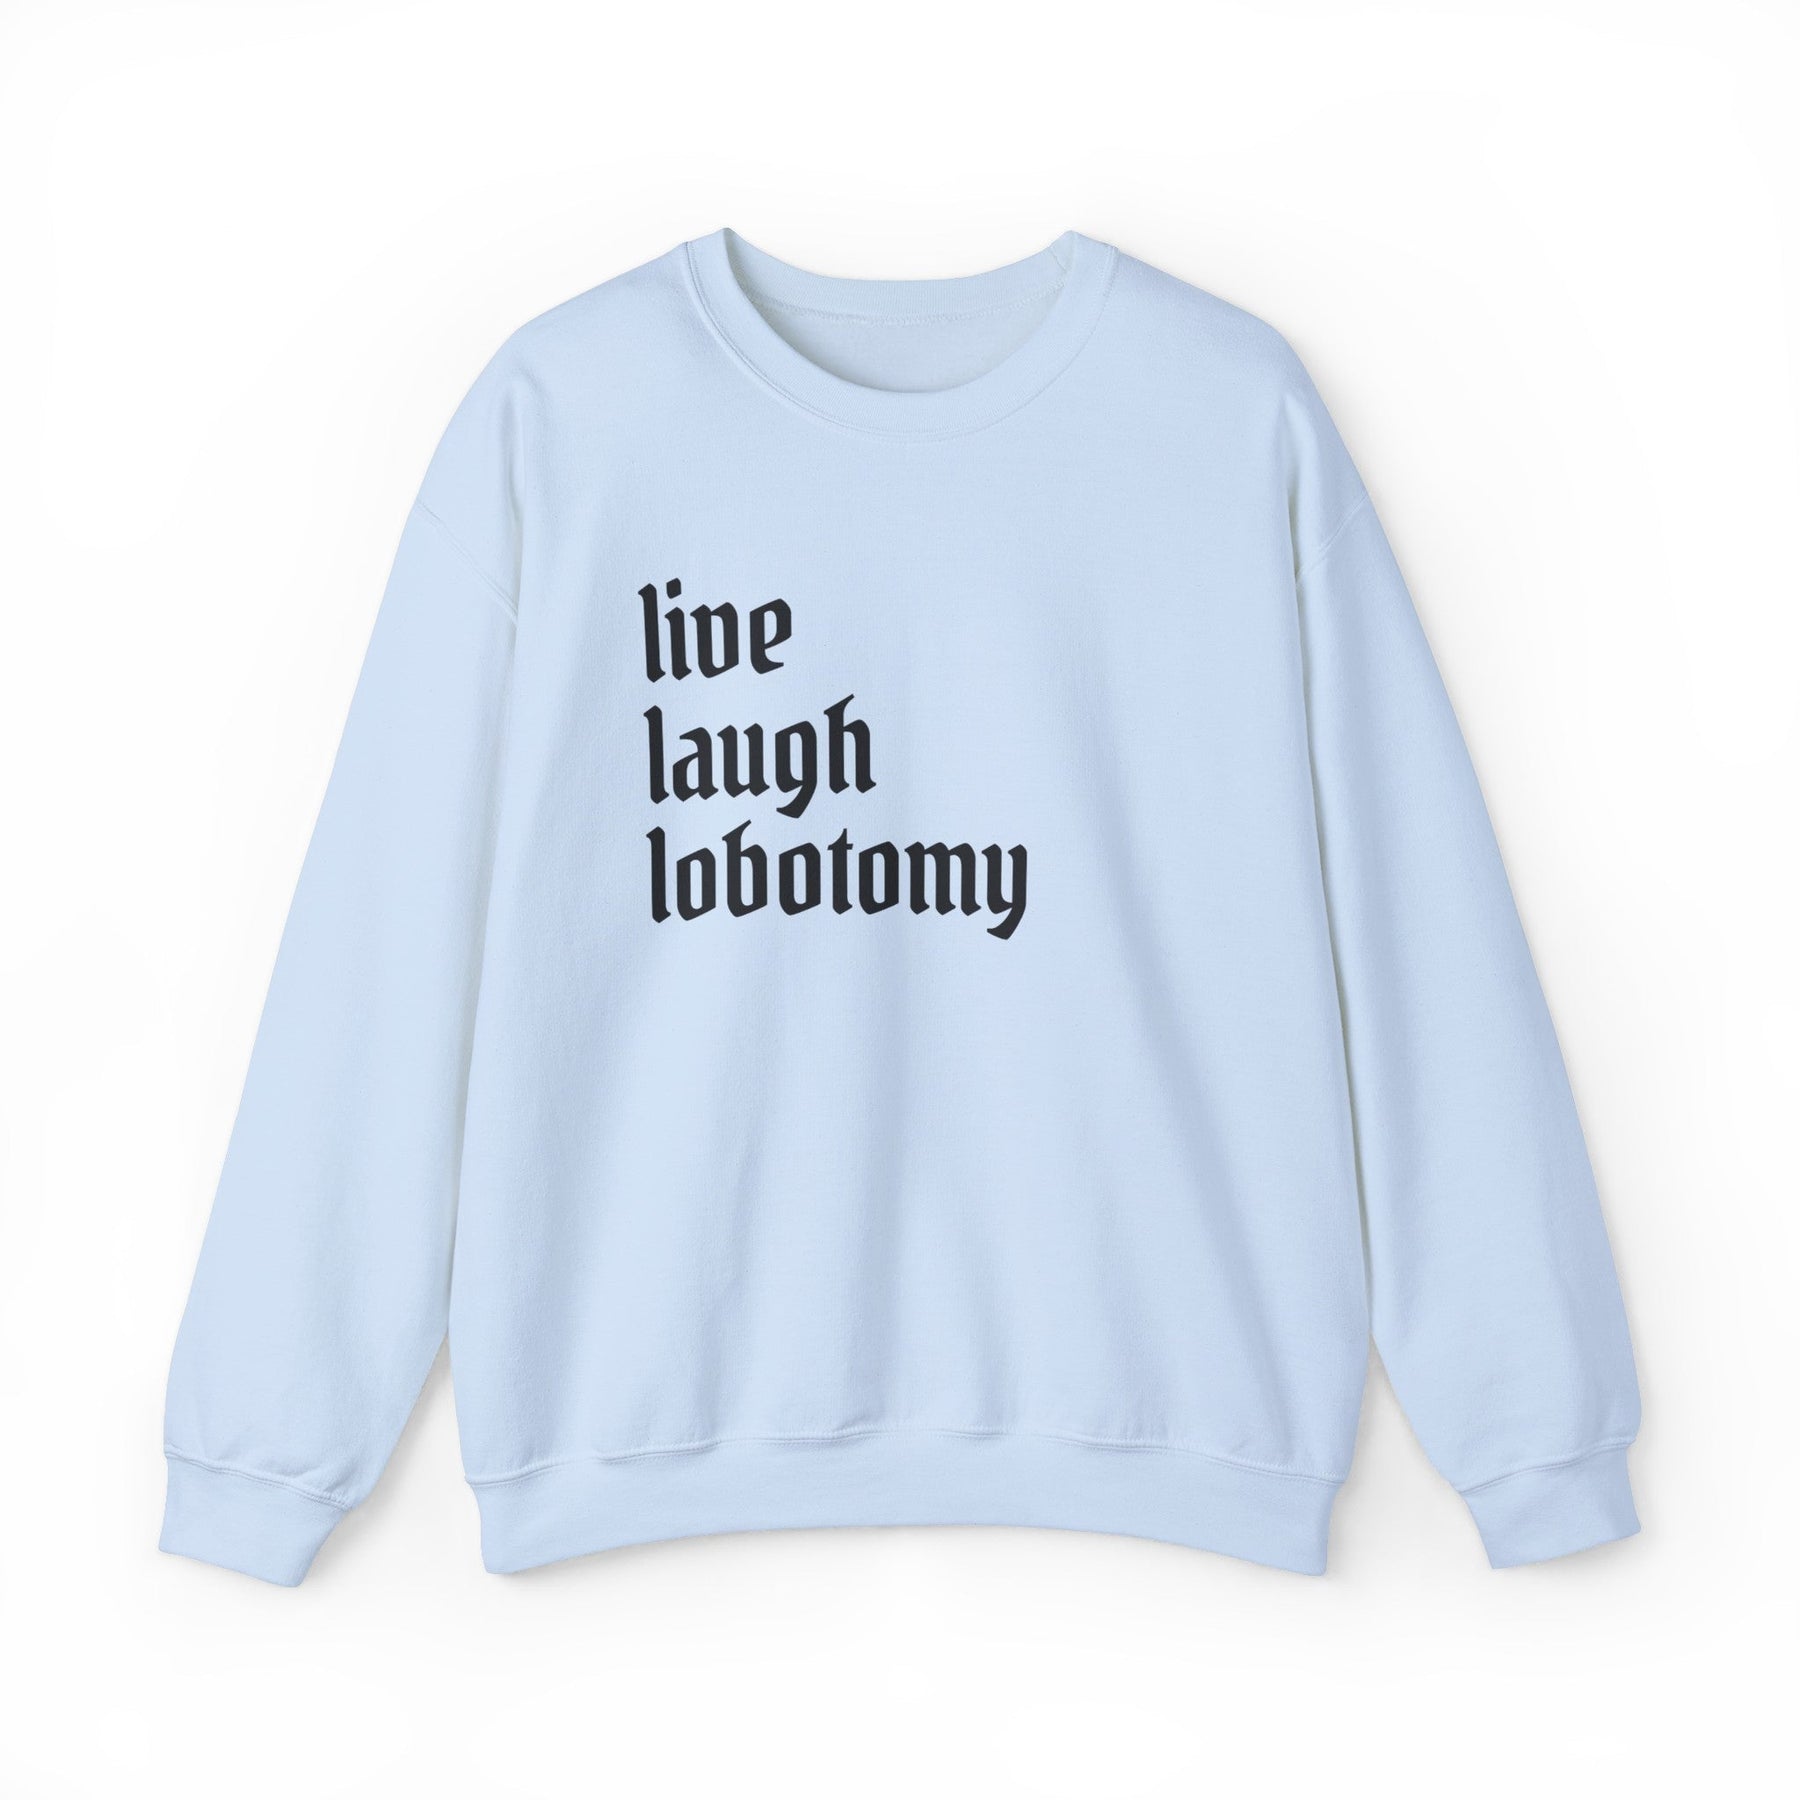 Live Laugh Lobotomy Feminine Goth Crew Neck Sweatshirt - Goth Cloth Co.Sweatshirt52255200160042777109